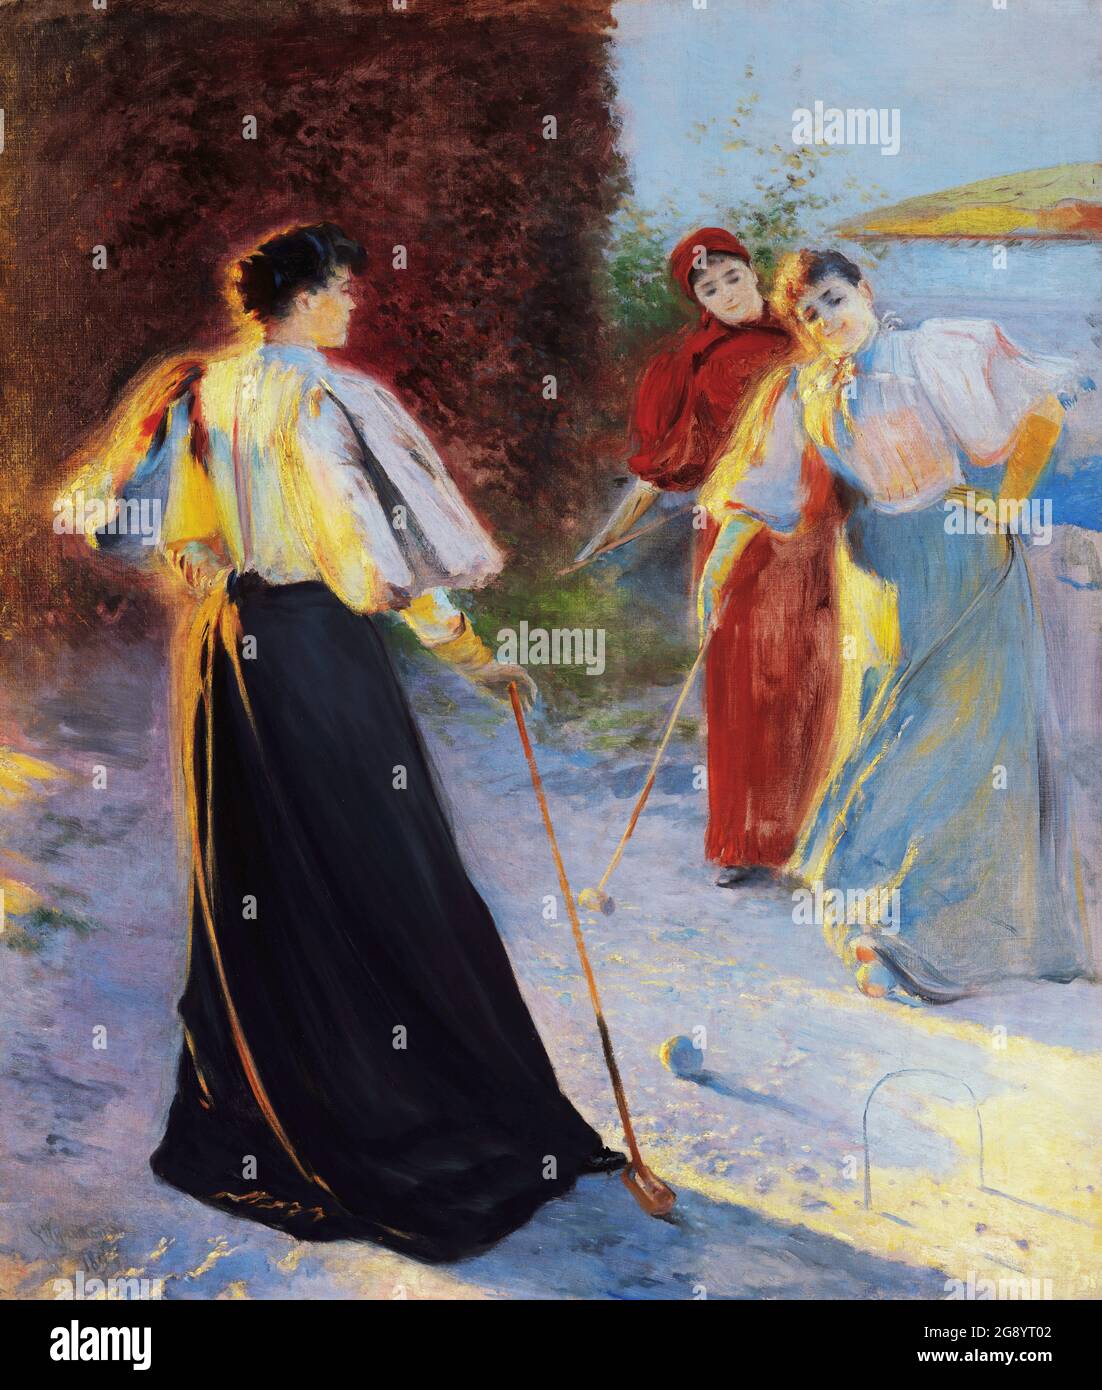 A Game of Croquet von Leon Jan Wyczółkowski (1852-1936), Öl auf Leinwand, 1895 Stockfoto